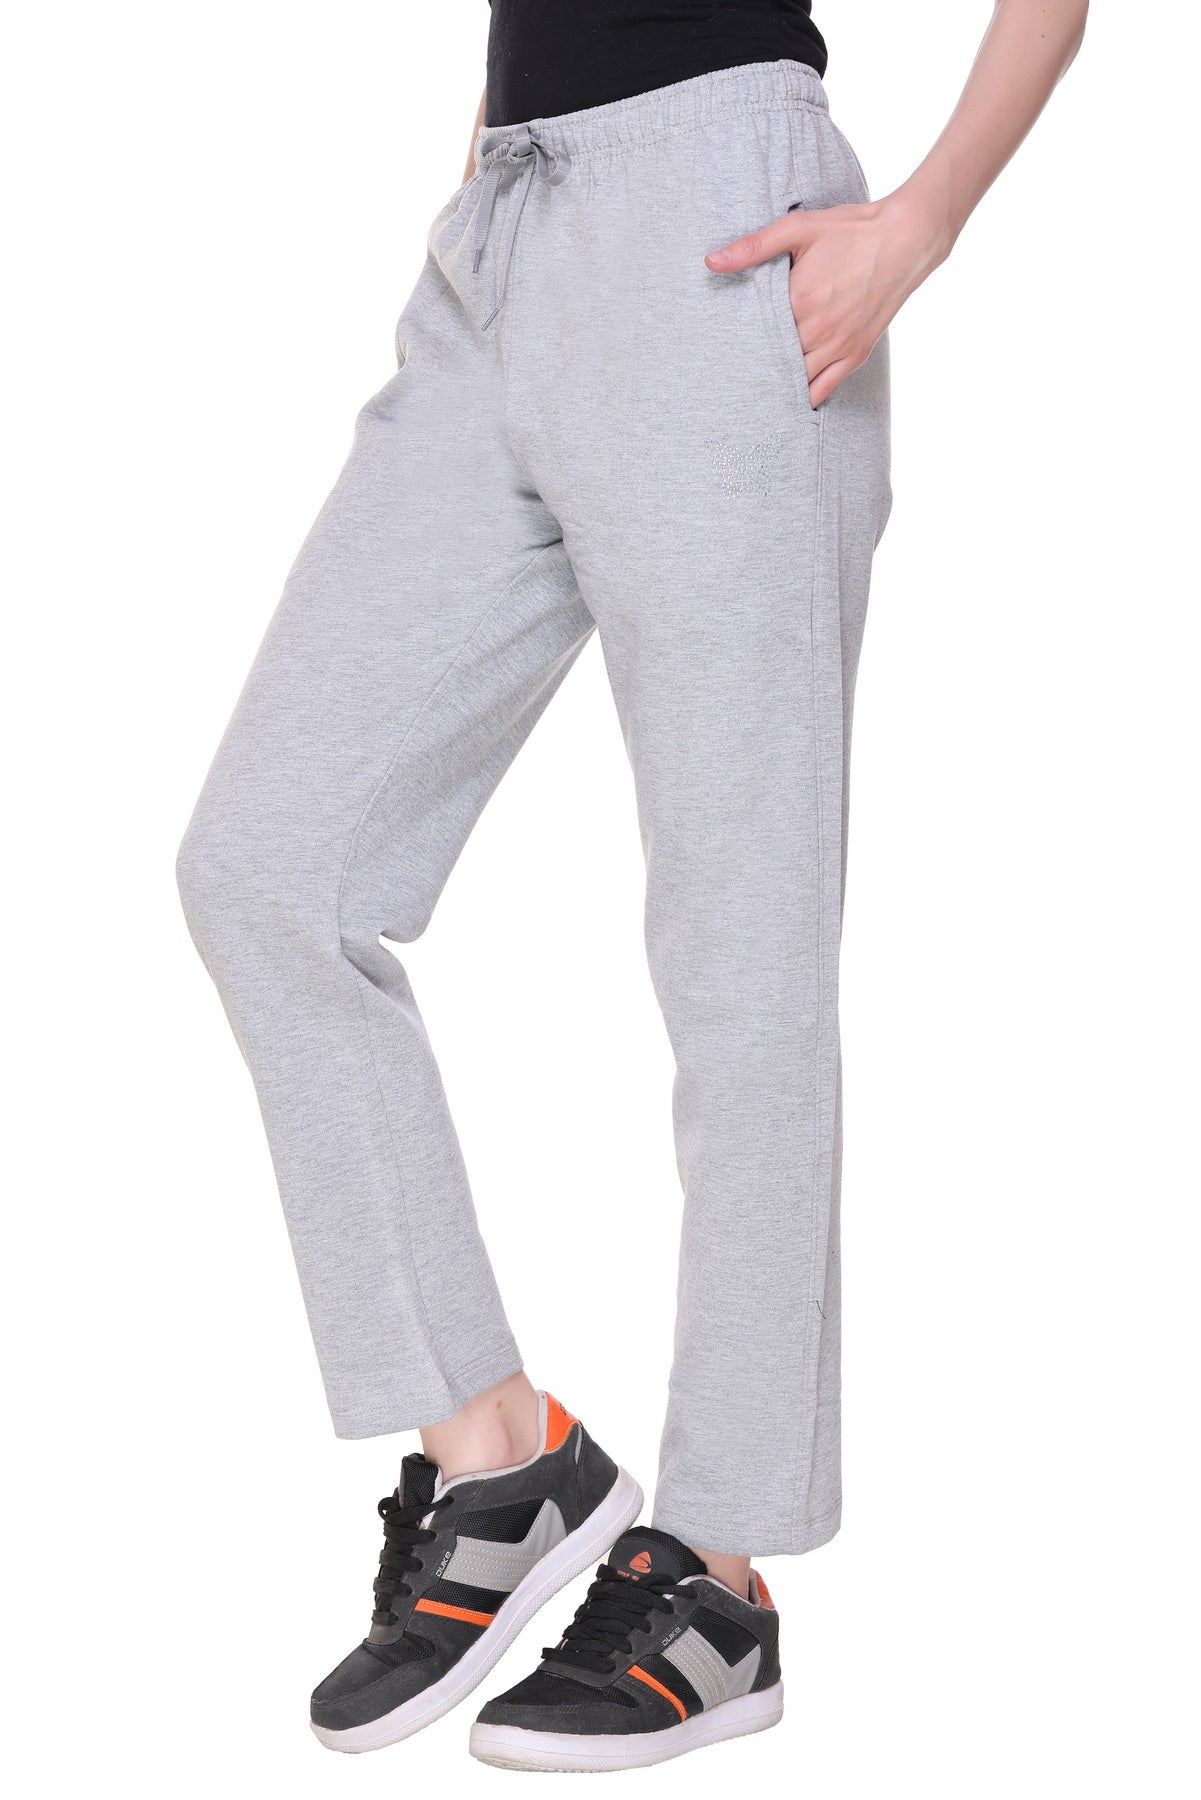 GreyWinter Wear Warm Fleece Track Pants For Women Navy in Dandeli at best  price by Tanya Enterprises - Justdial